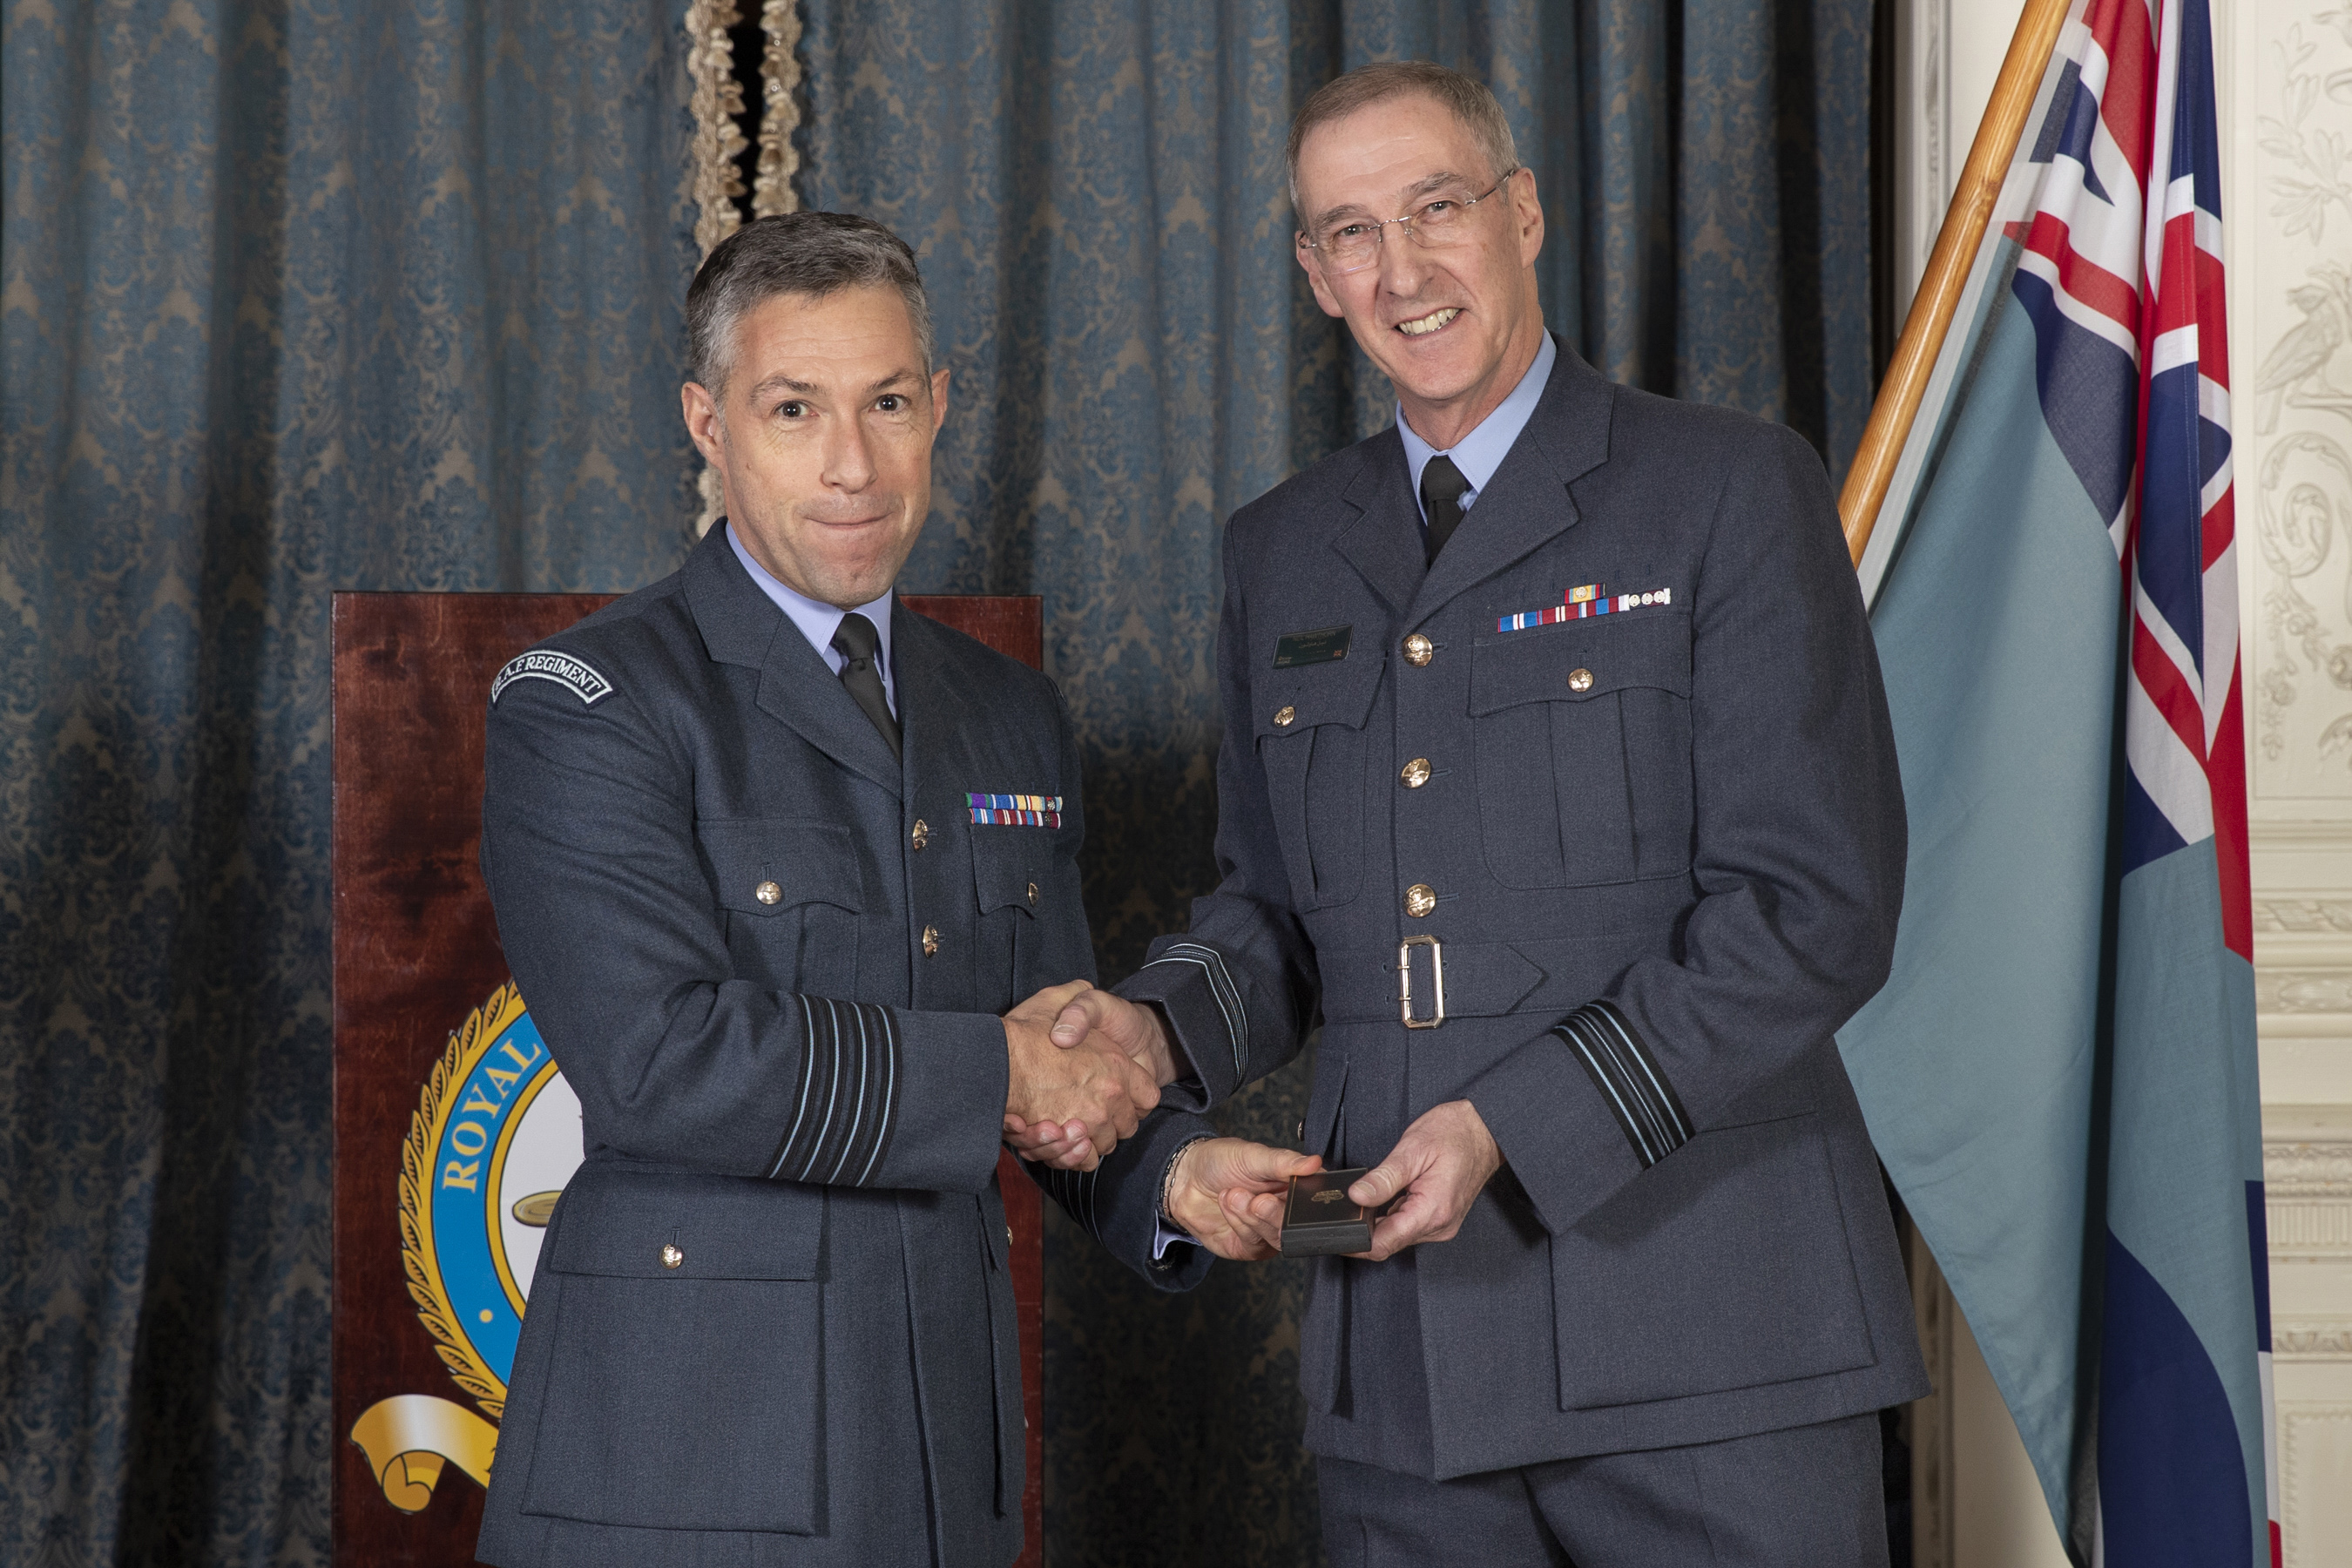 Image shows RAF Aviators shaking hands.